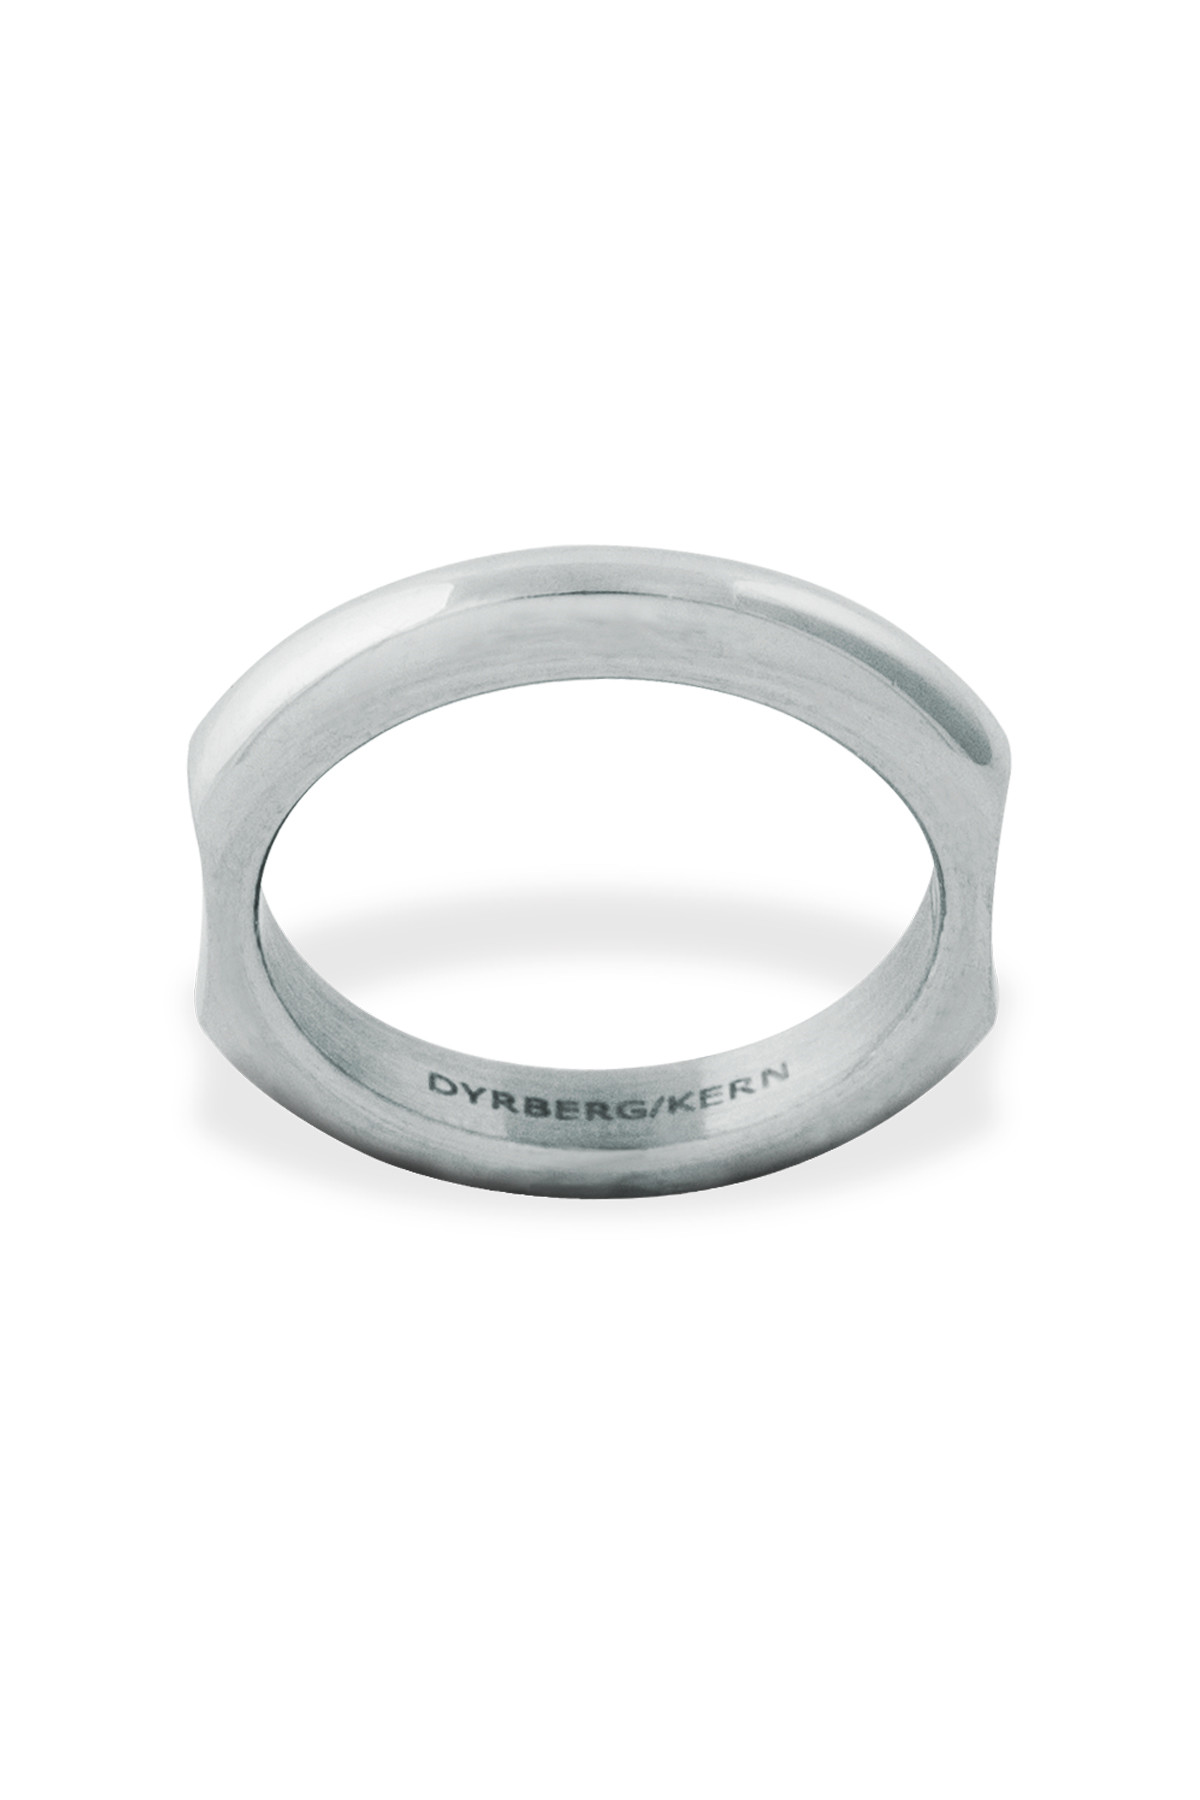 Dyrberg/Kern Spacer B Ring, Color: Silver, I/, Women